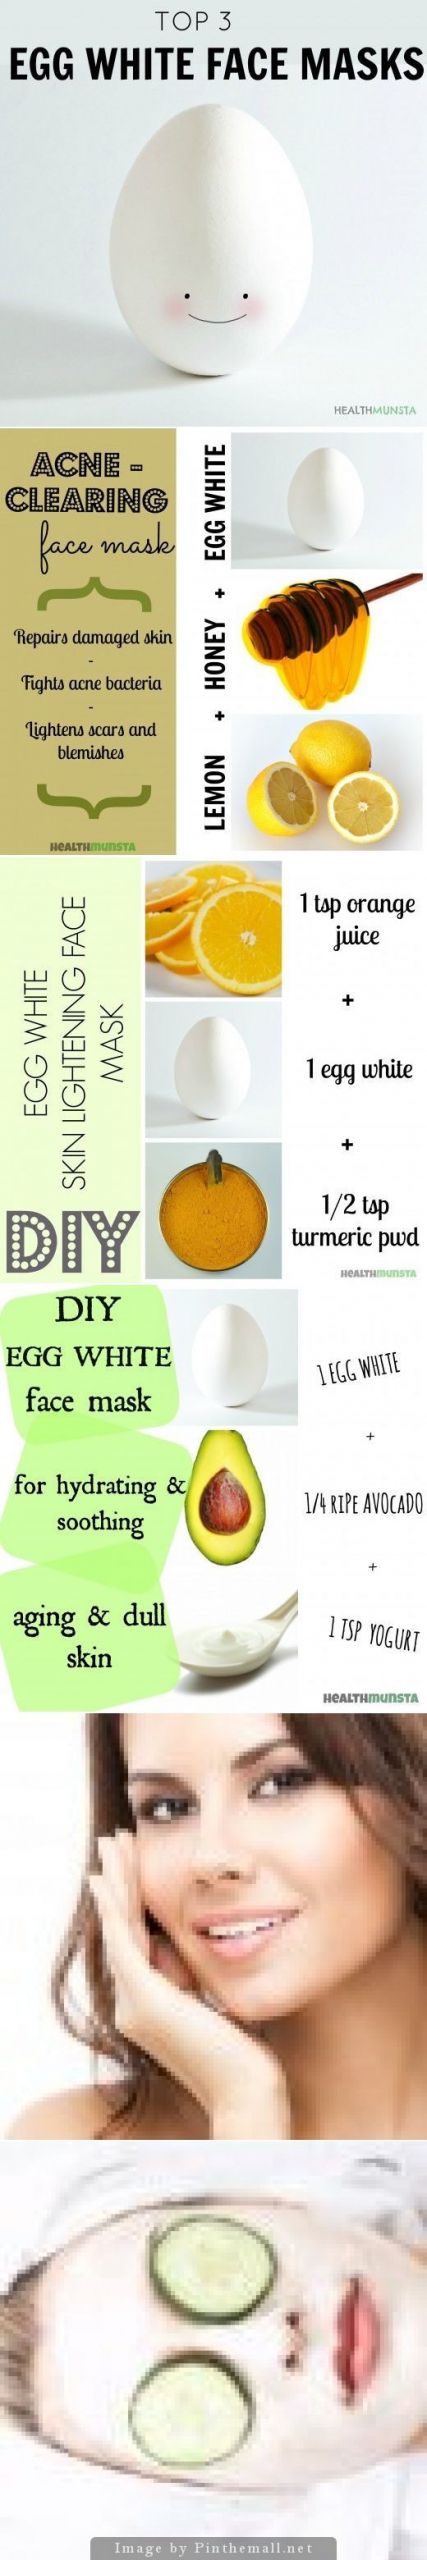 Egg White Mask DIY
 Homemade Beautiful and Eggs on Pinterest